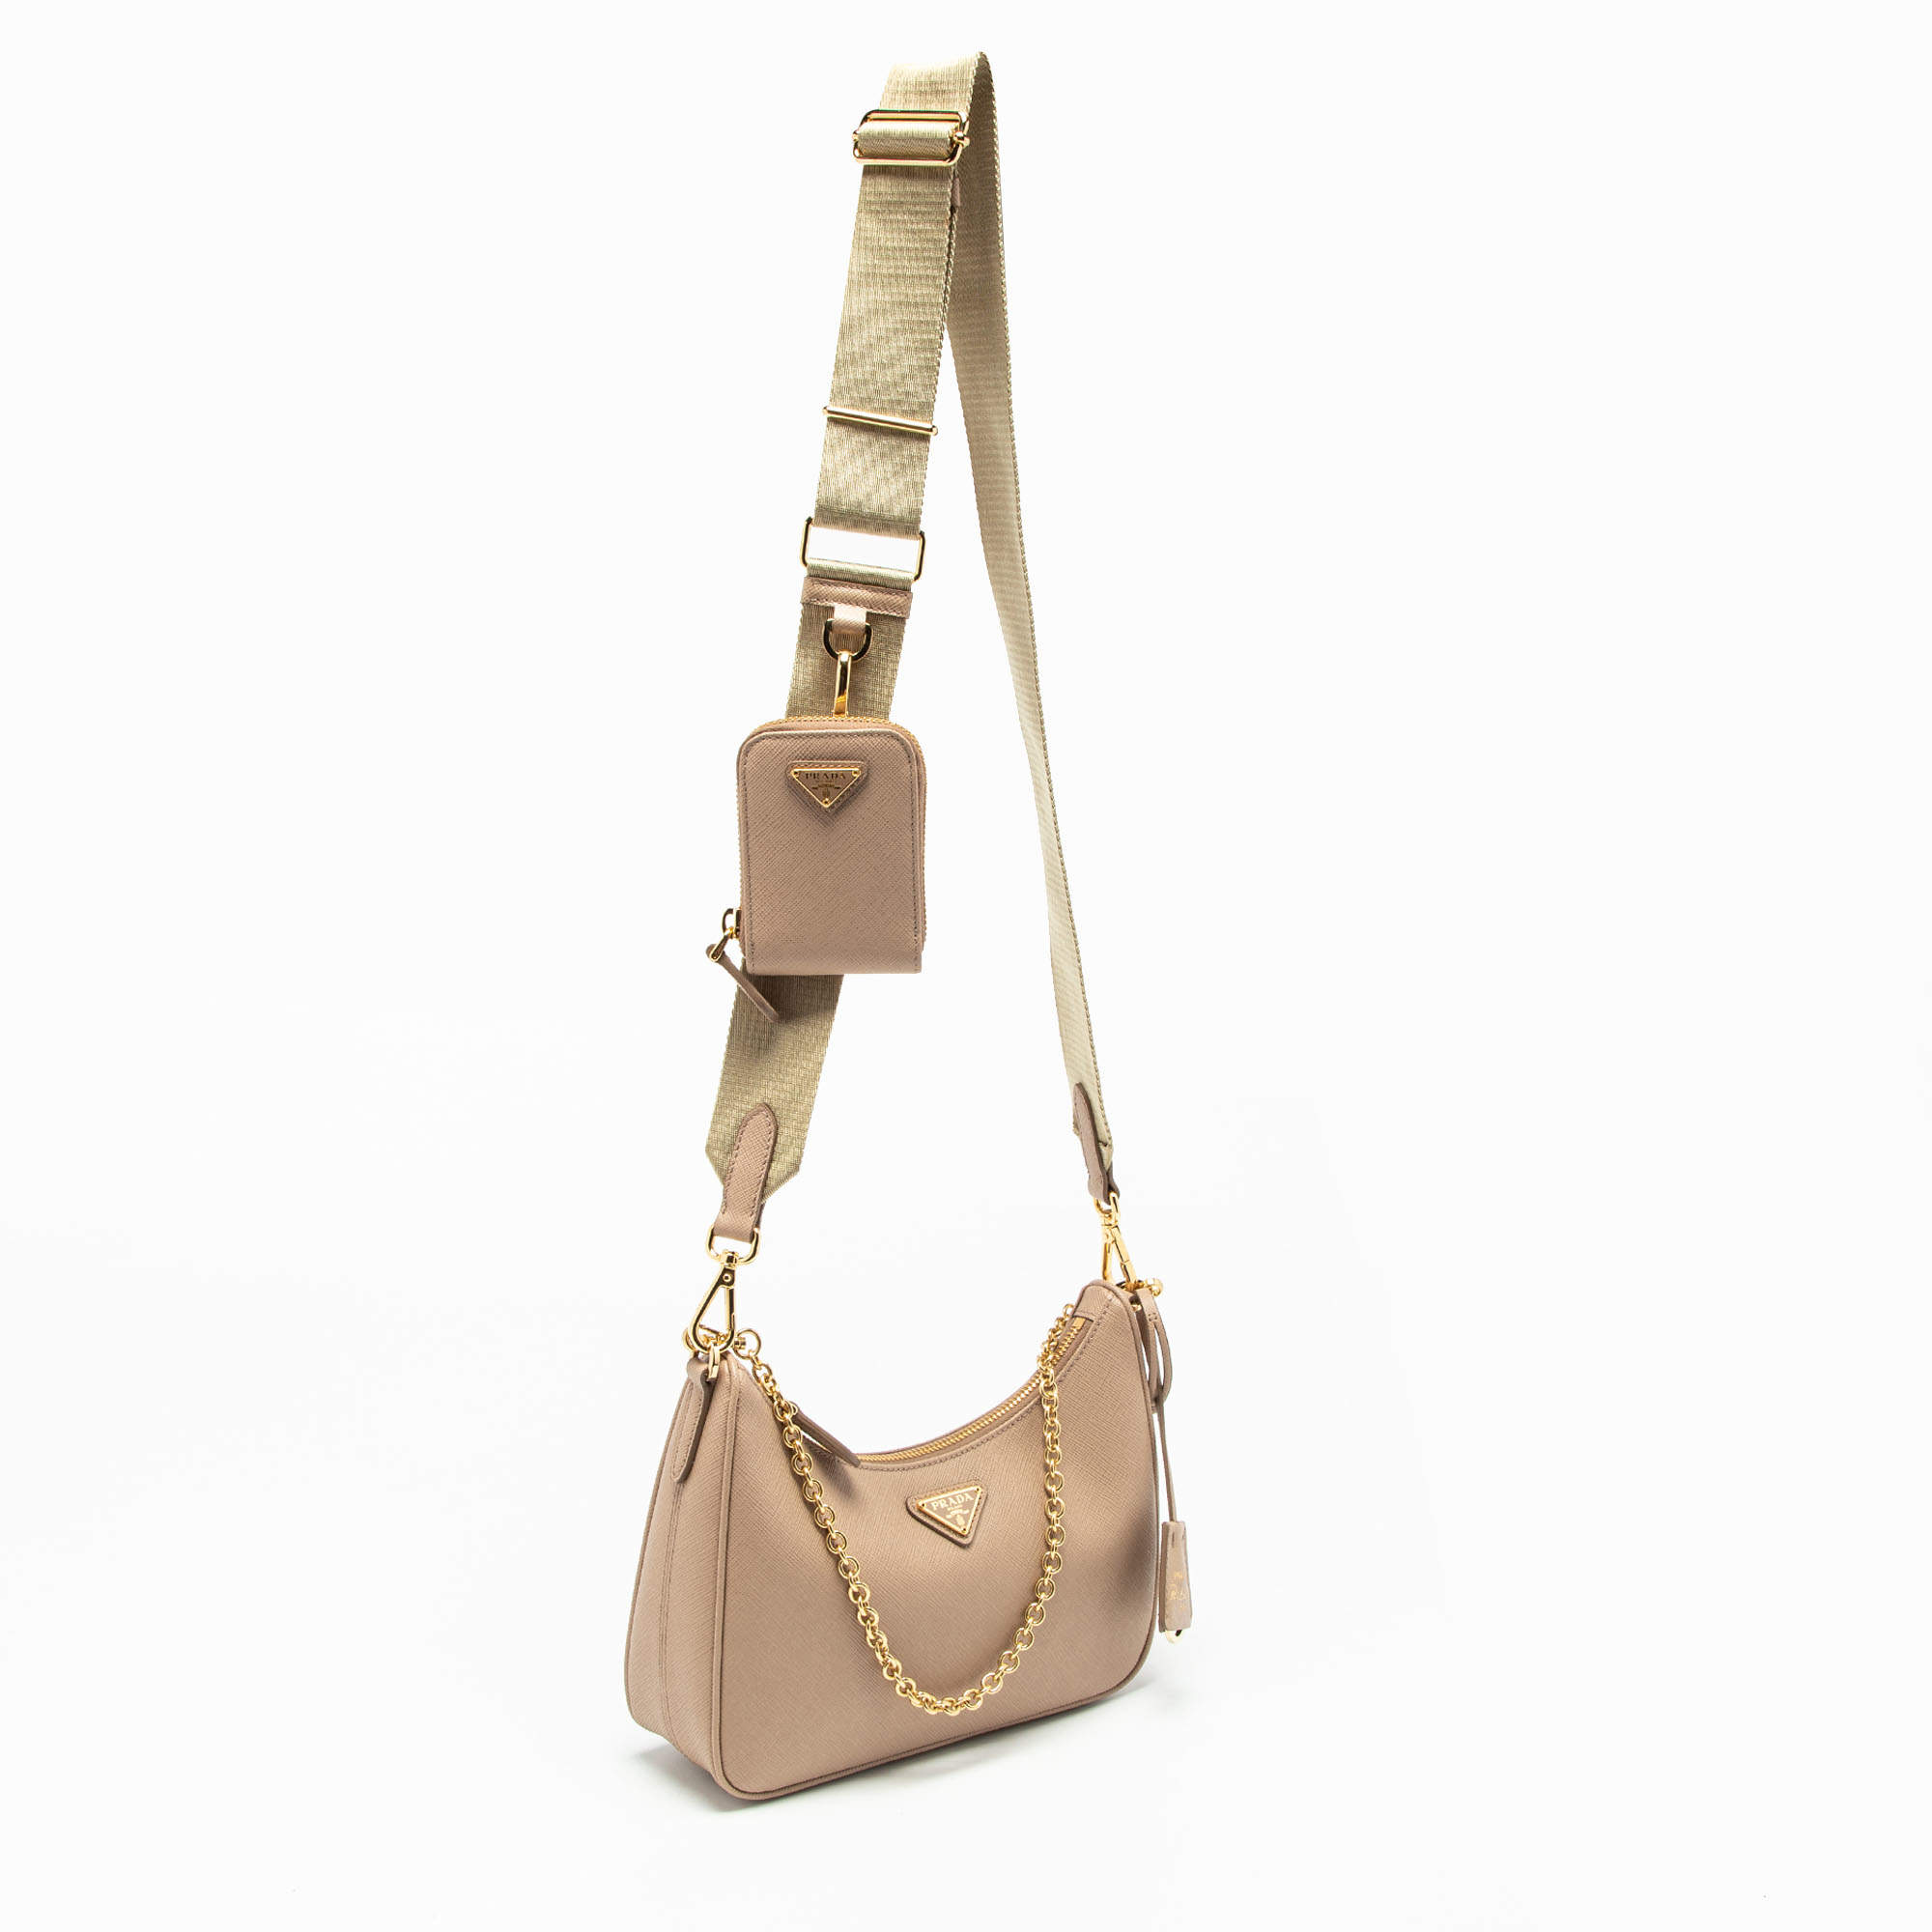 Prada Re-edition 2005 Saffiano Leather Bag in Cameo Beige - 100